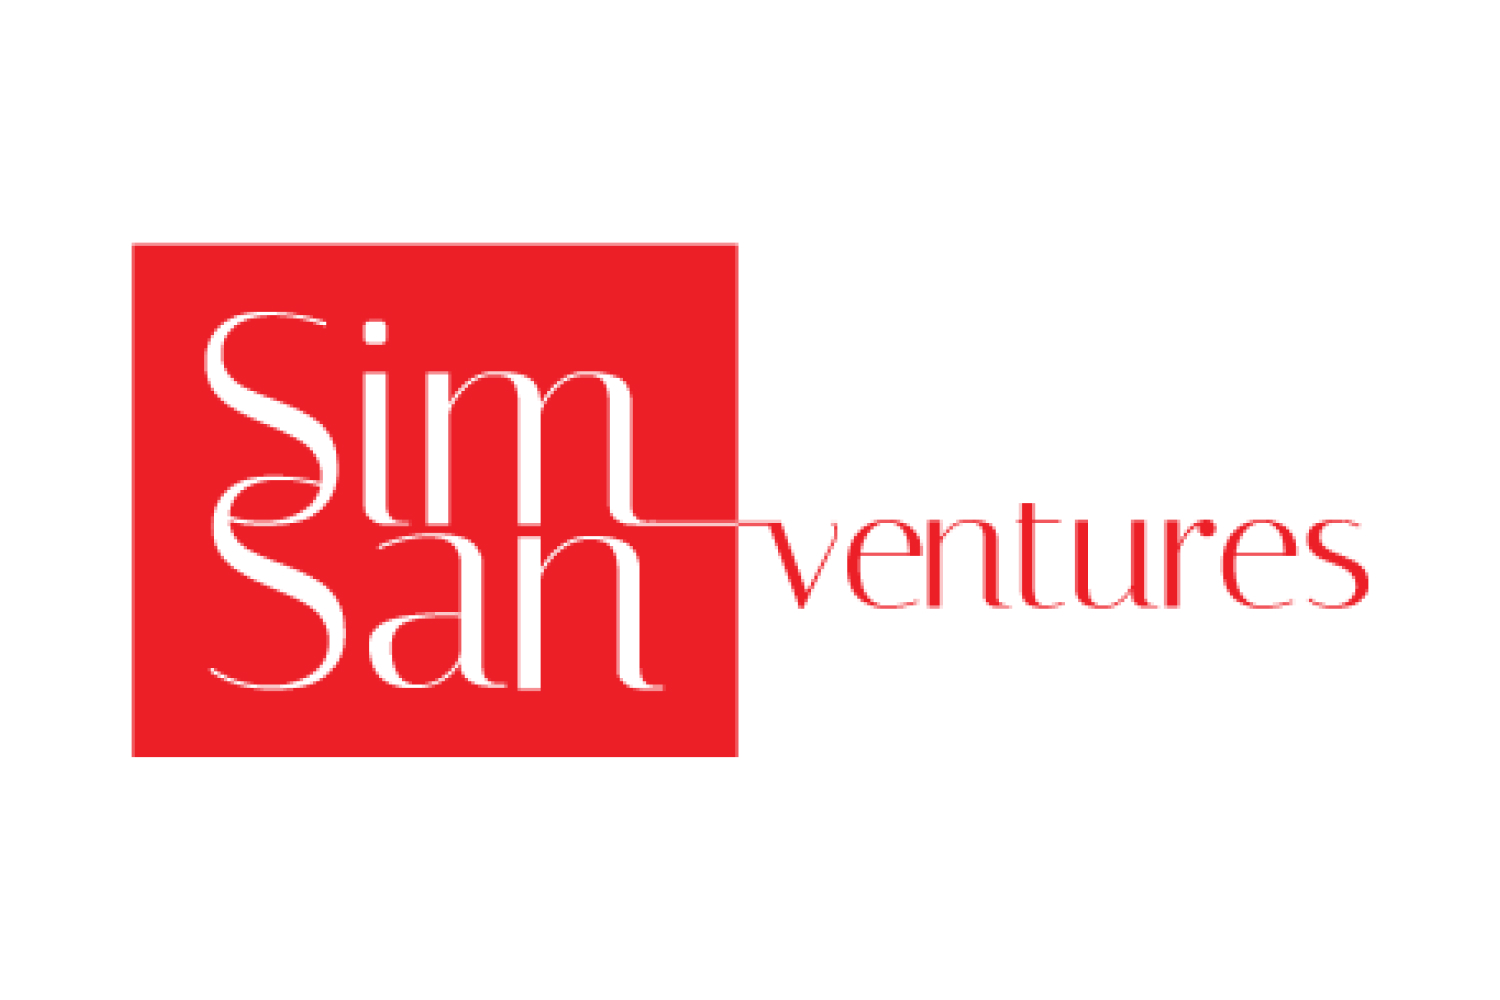 Simsan Ventures logo